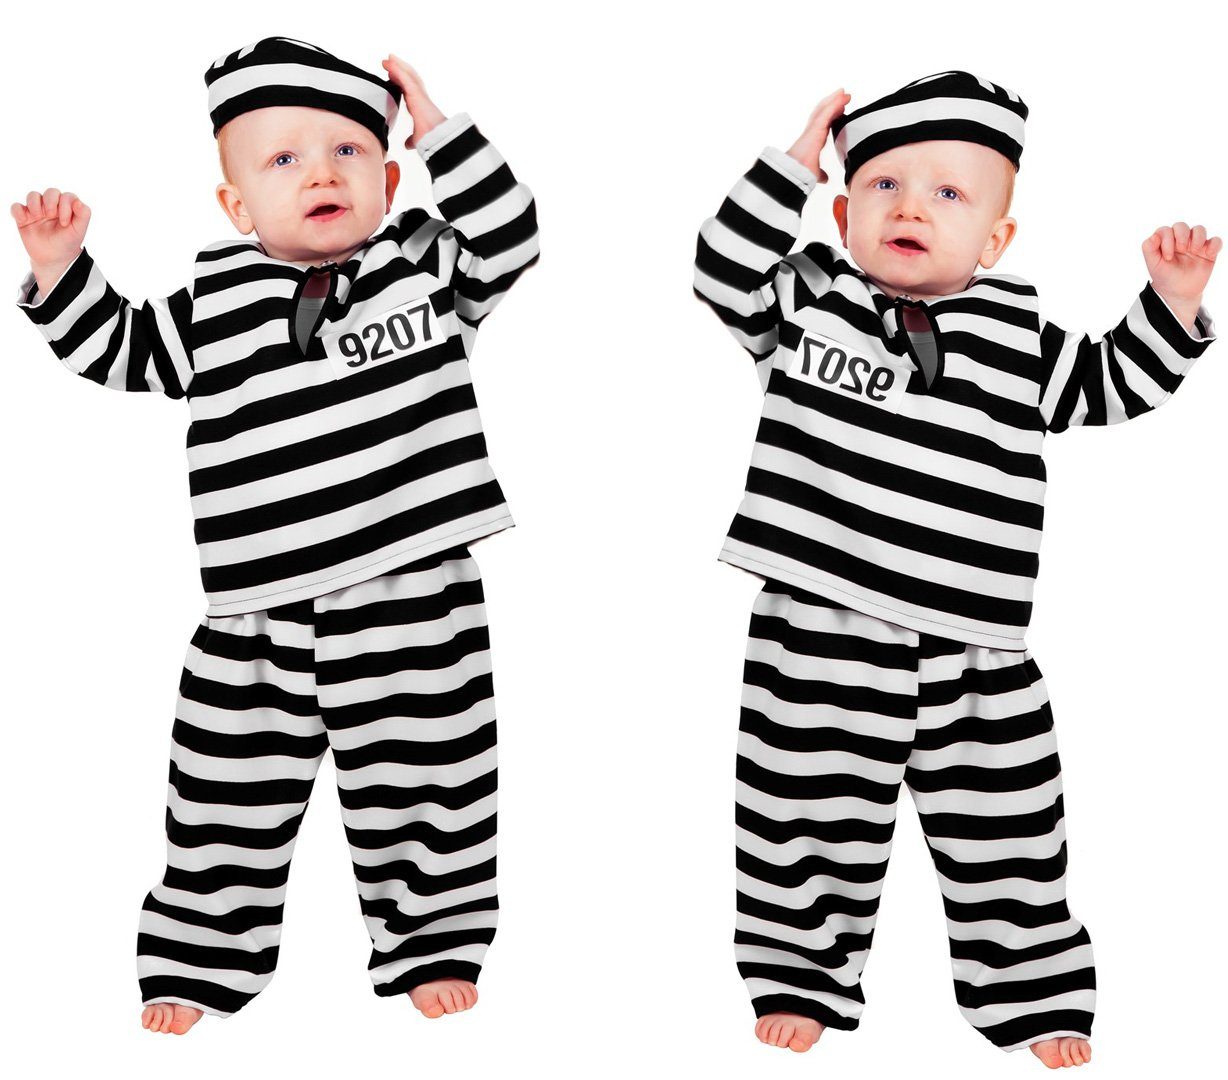 Wilbers Kostüm Wilbers Kinderkostüm Baby Sträfling Gr. 86- 92 cm -Babykostüm Gefangener